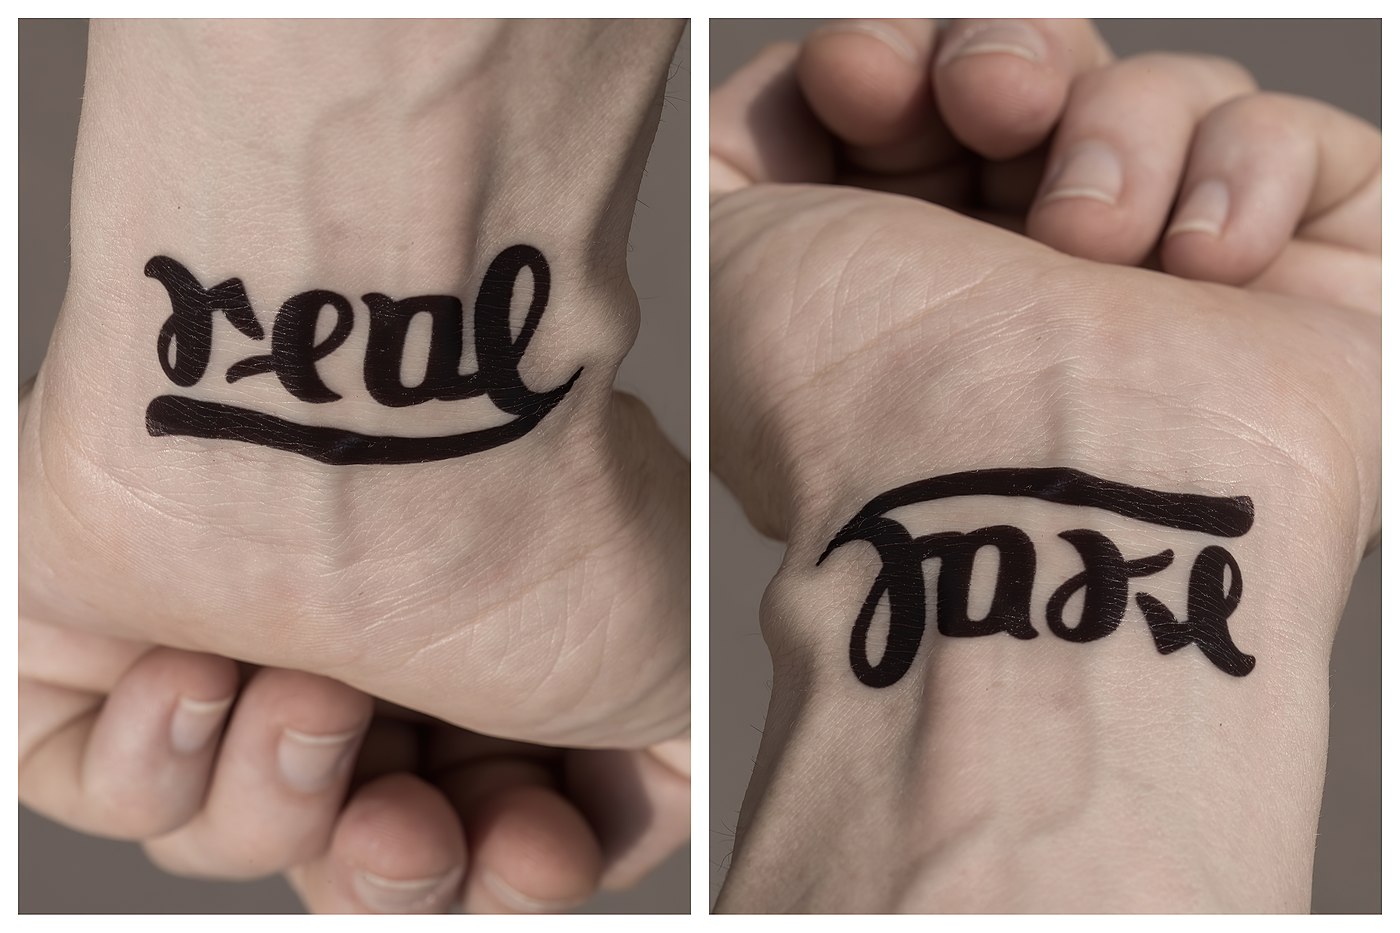 ambigram Real / Fake tattoo hand